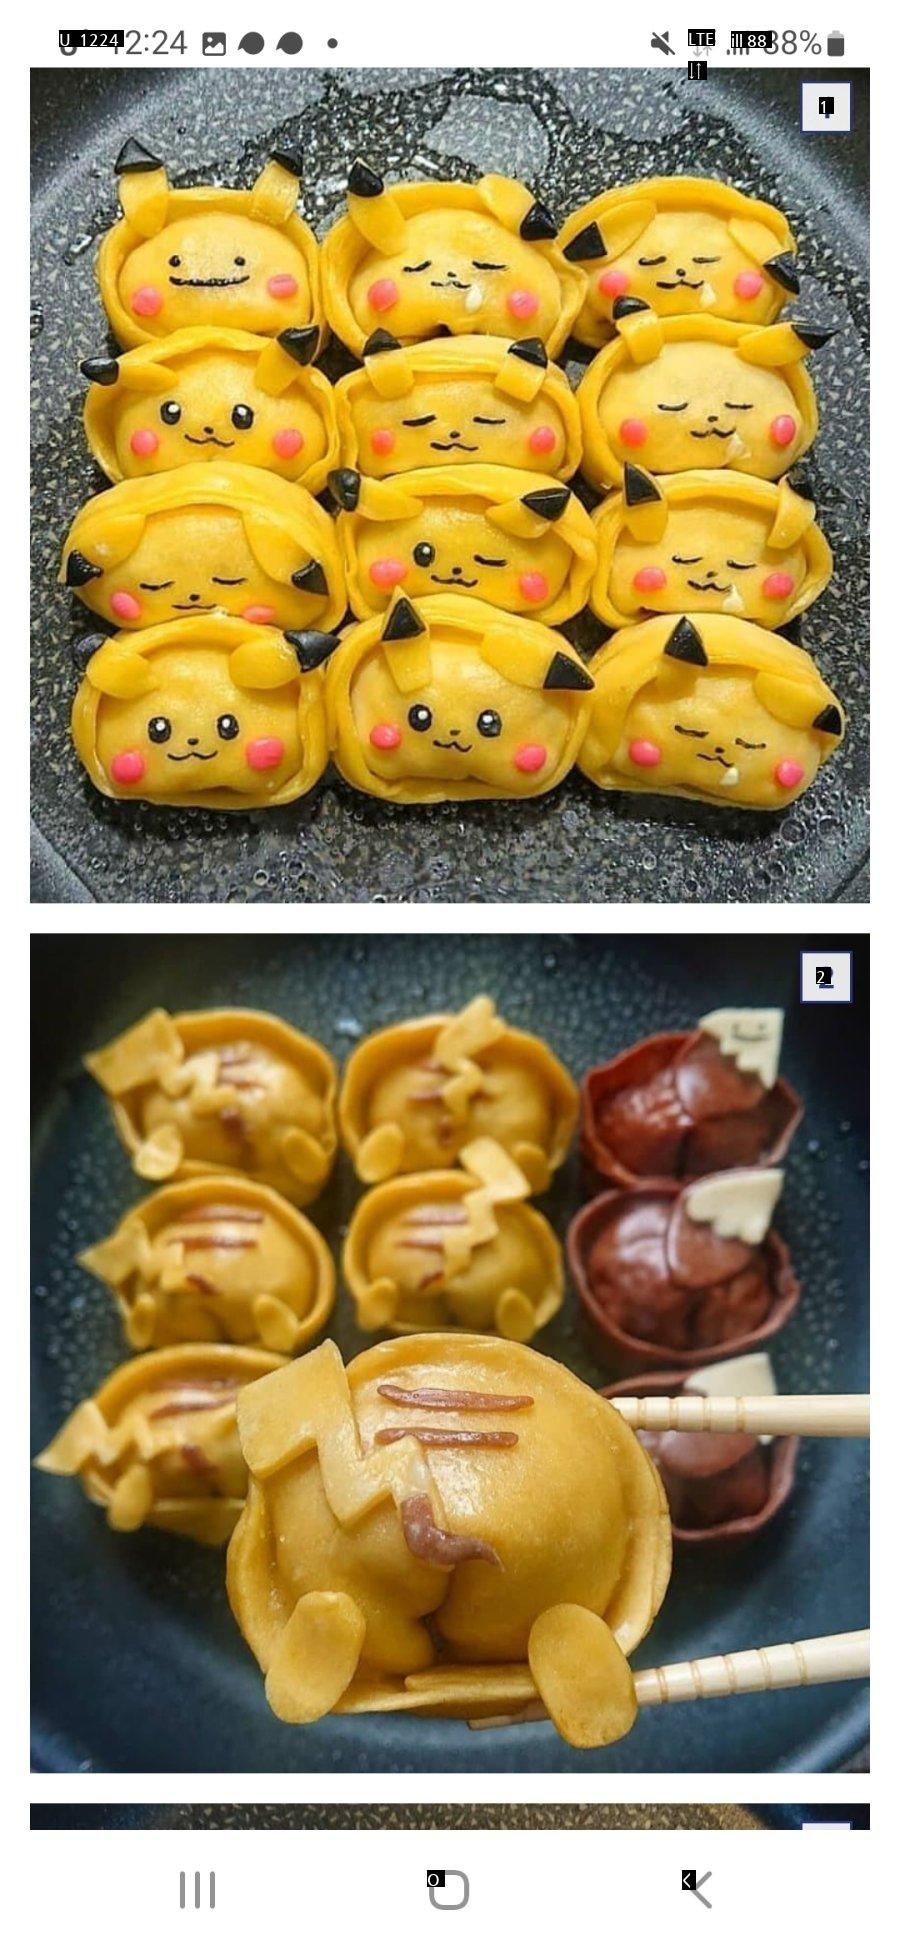 dumplings made by gyoza craftsmen in Kyoto, Japan